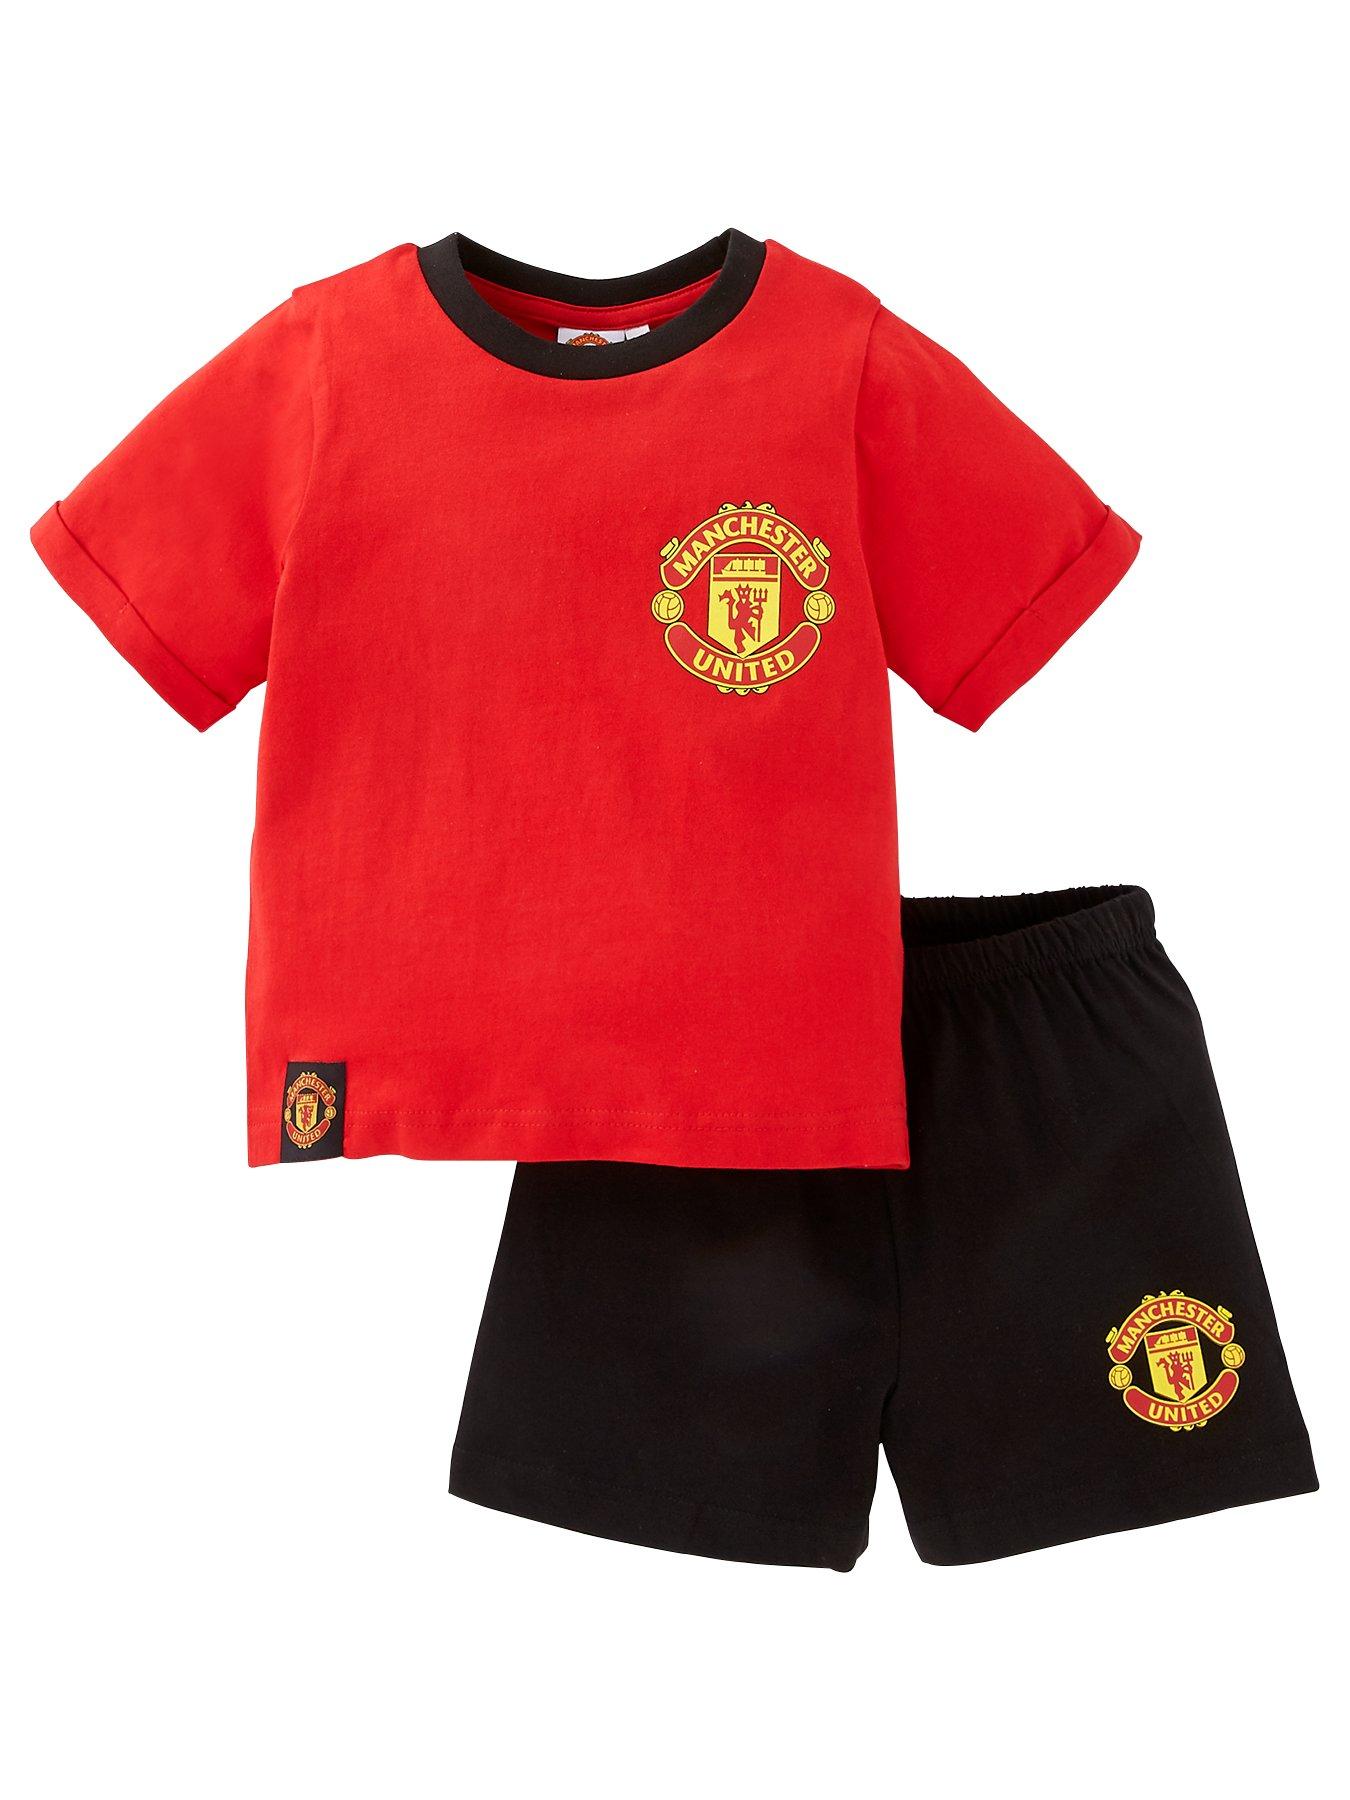 Boys Kids Manchester United Pyjamas PJs Nightwear 2 to 12 Years Long Sleeve Red 